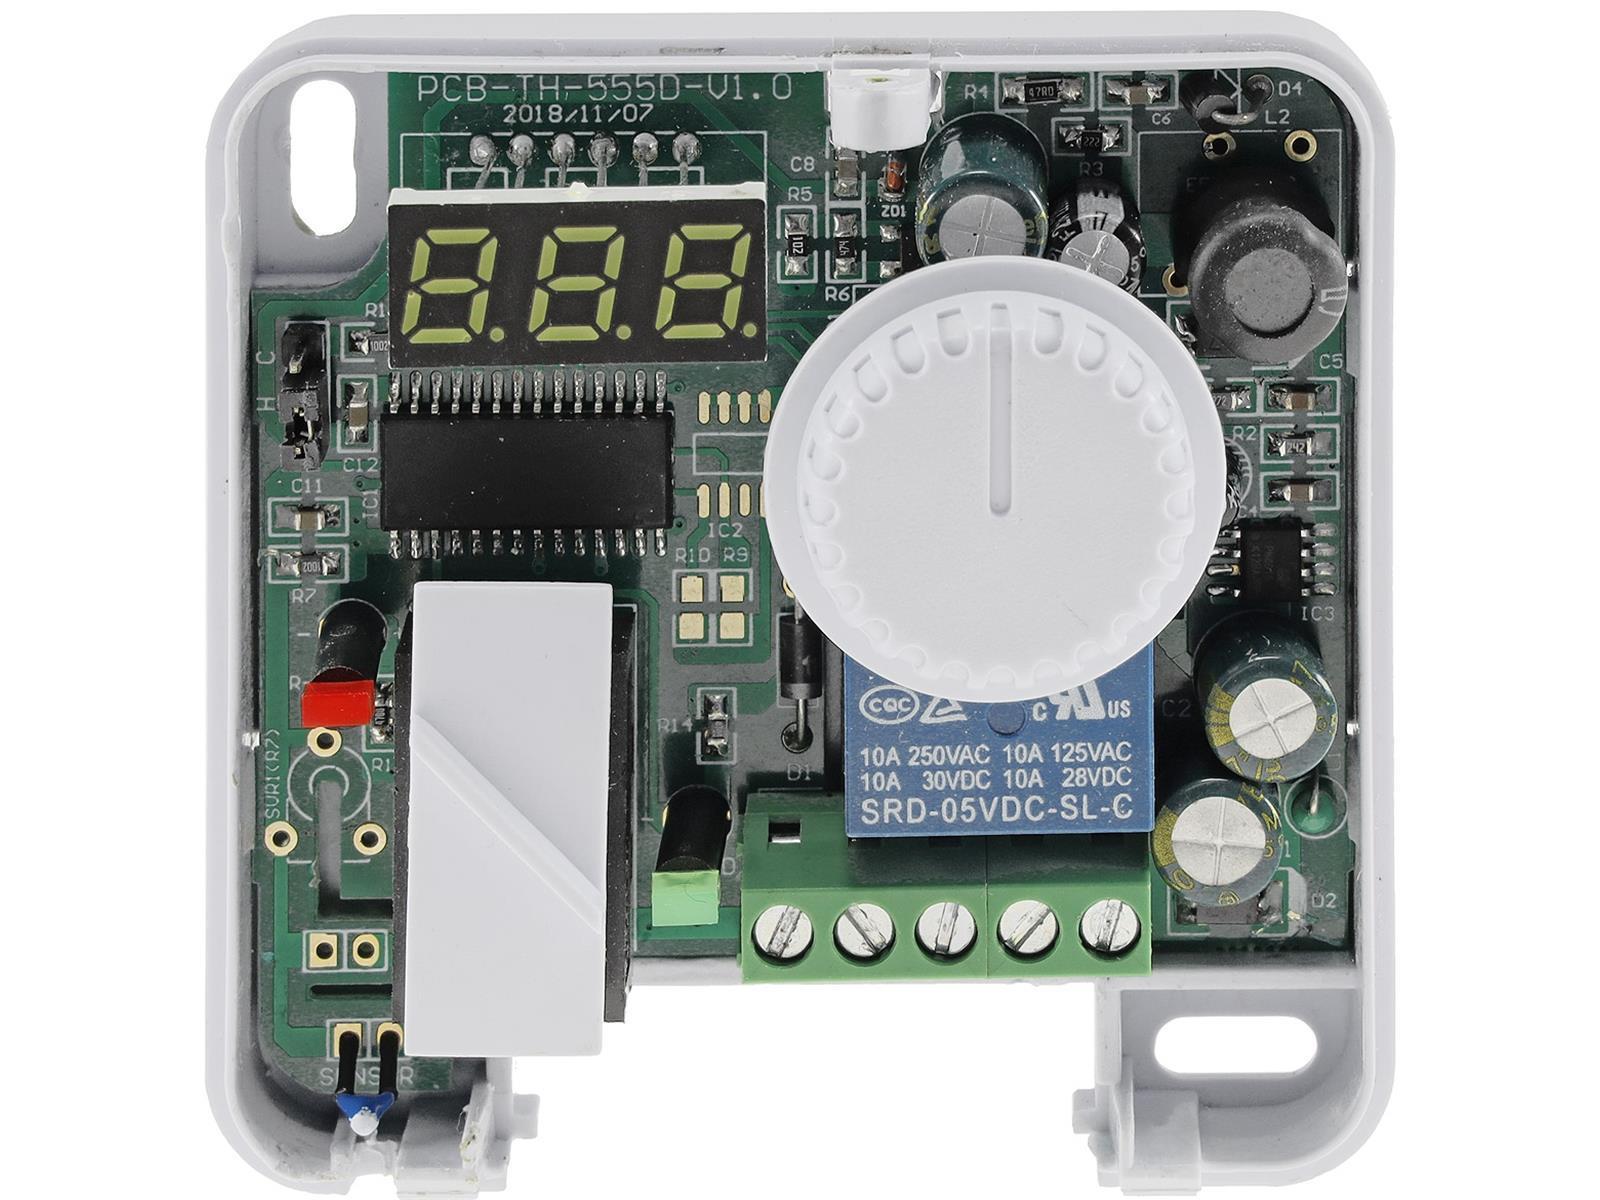 Raumtemperatur-Regler Thermostat "RT-55"7A, weißes LED-Display, 5-30°C, 110-230V